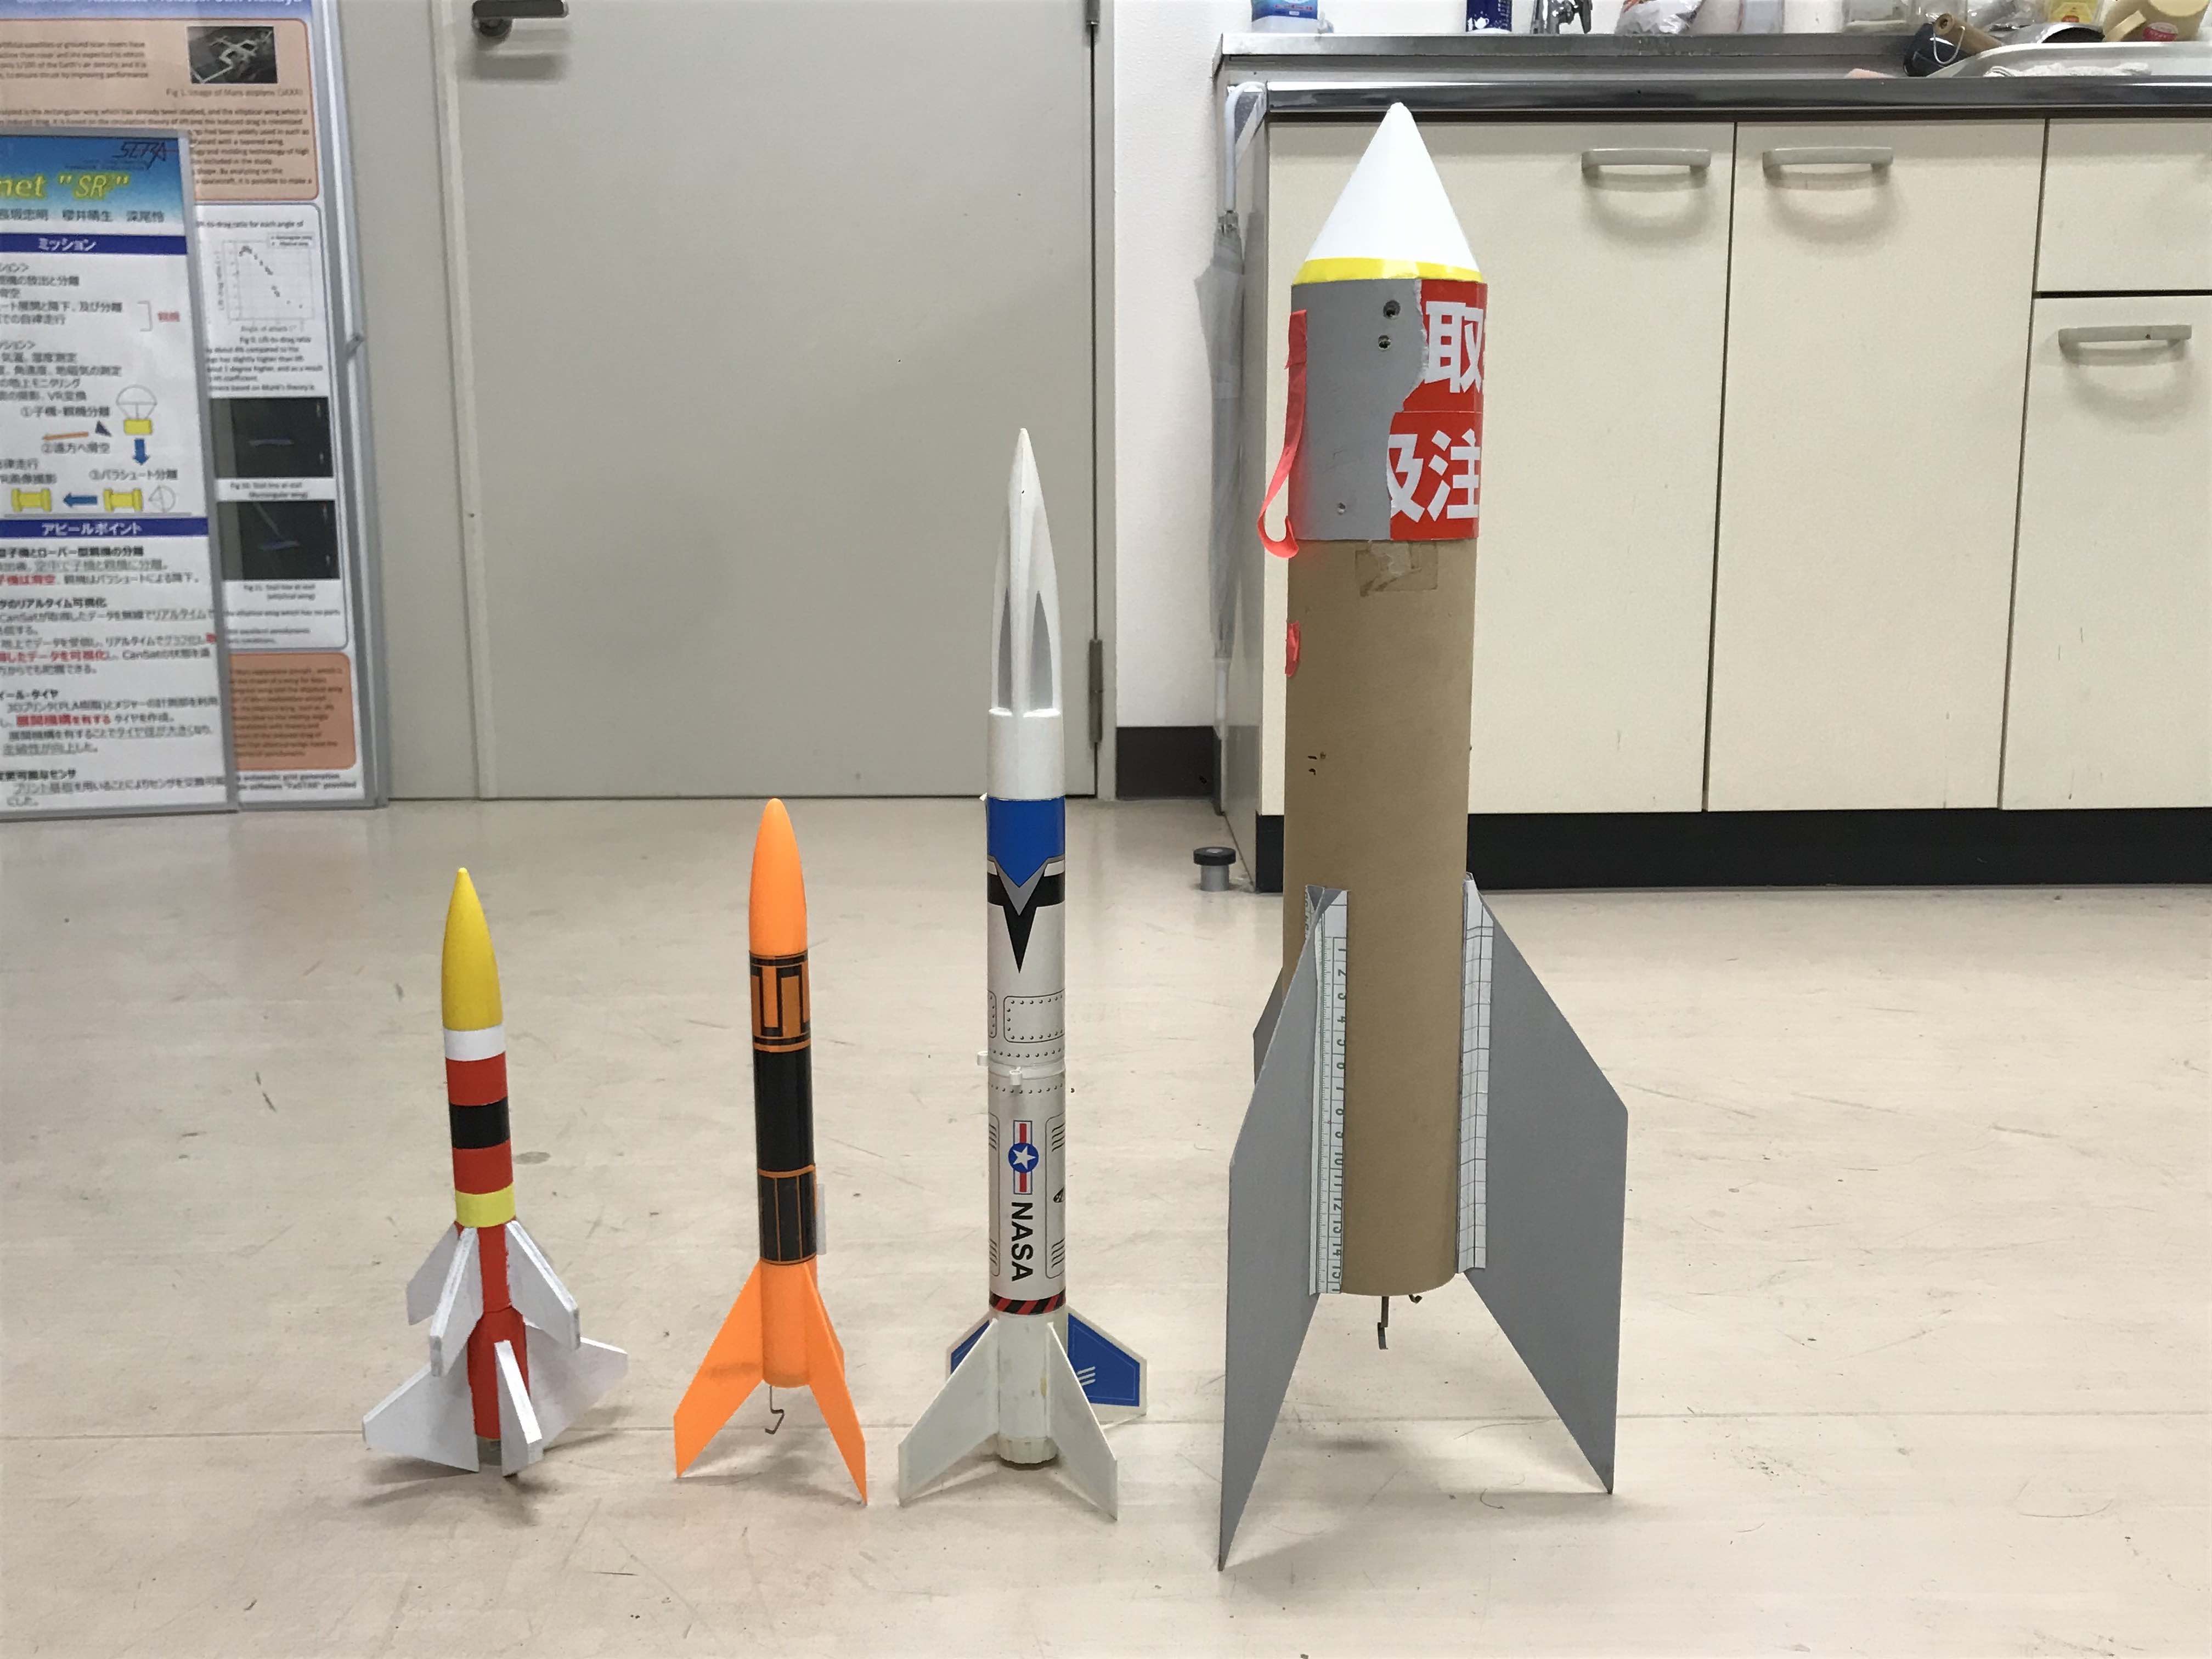 Rocket-top image